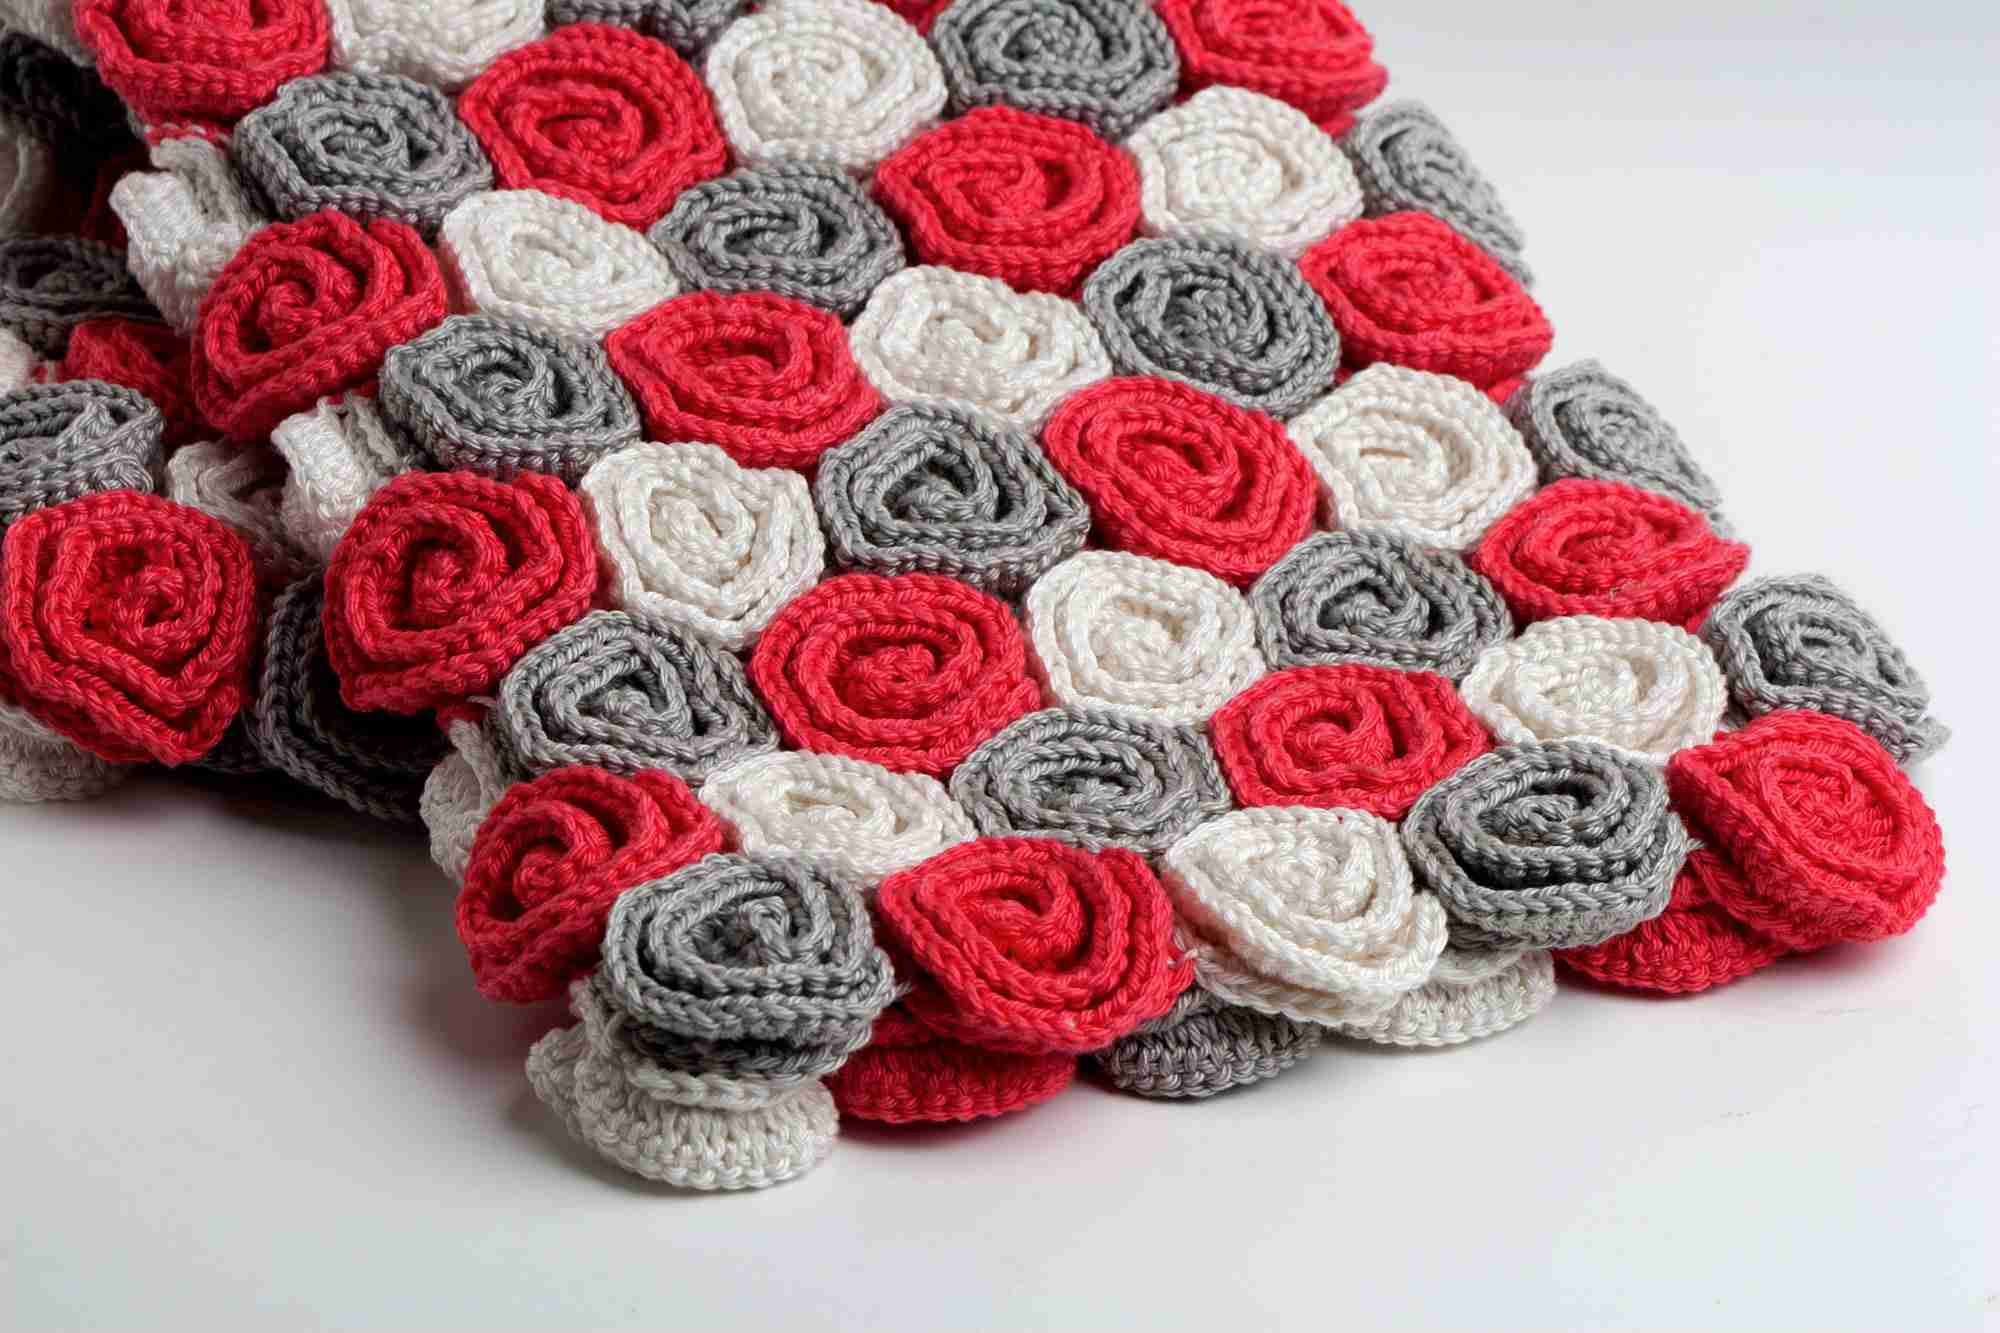 Crochet Throw Patterns Uk 15 Adorable Crochet Ba Blanket Patterns